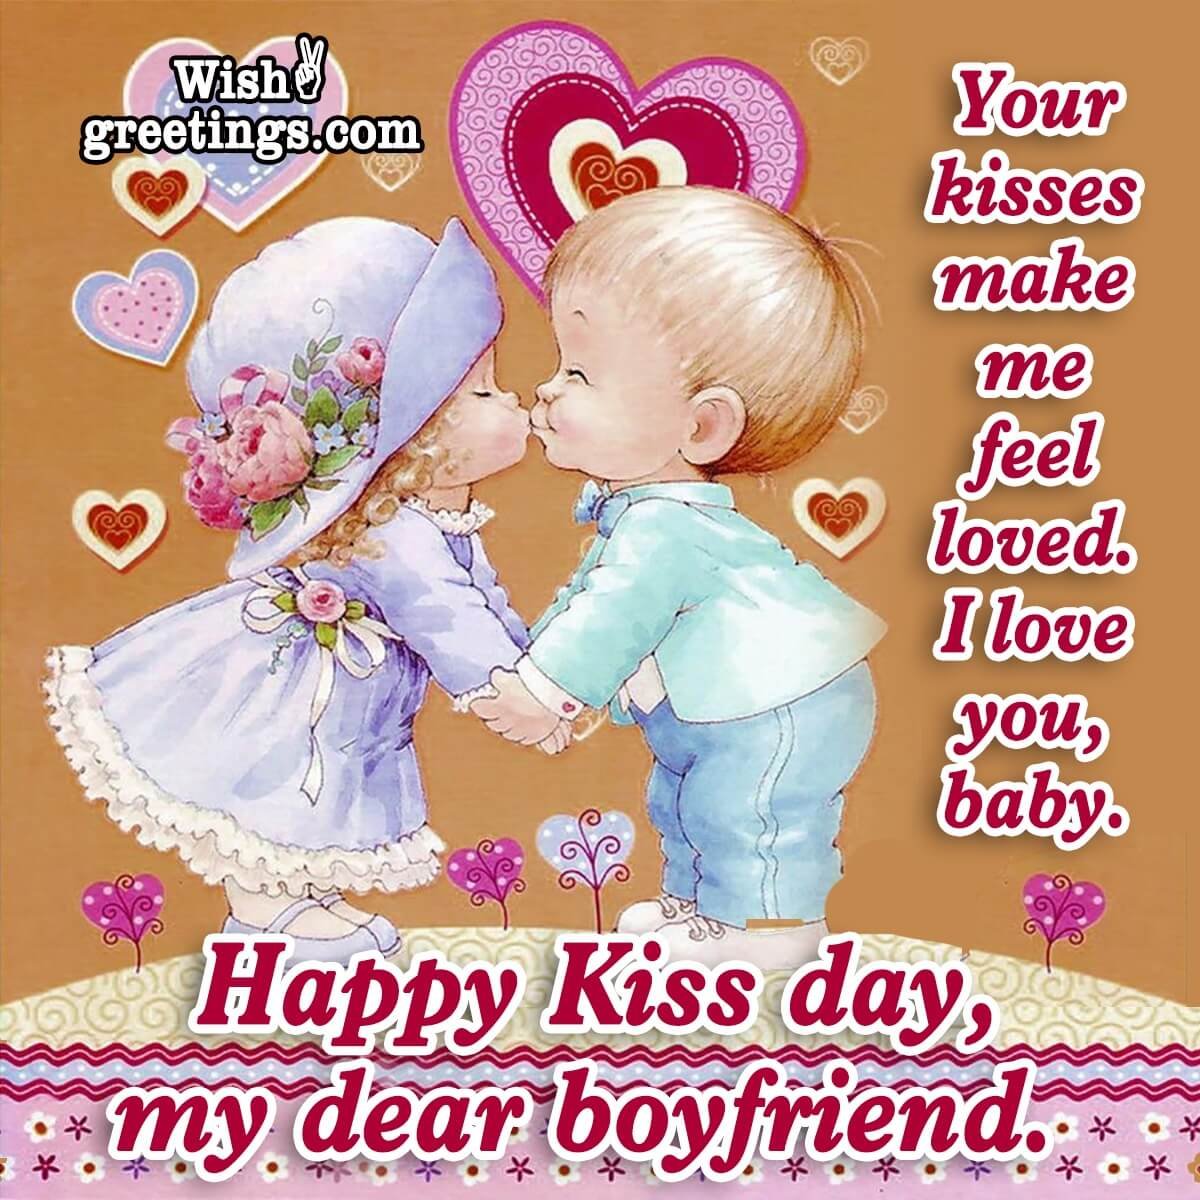 Happy Kiss Day My Dear Boyfriend!